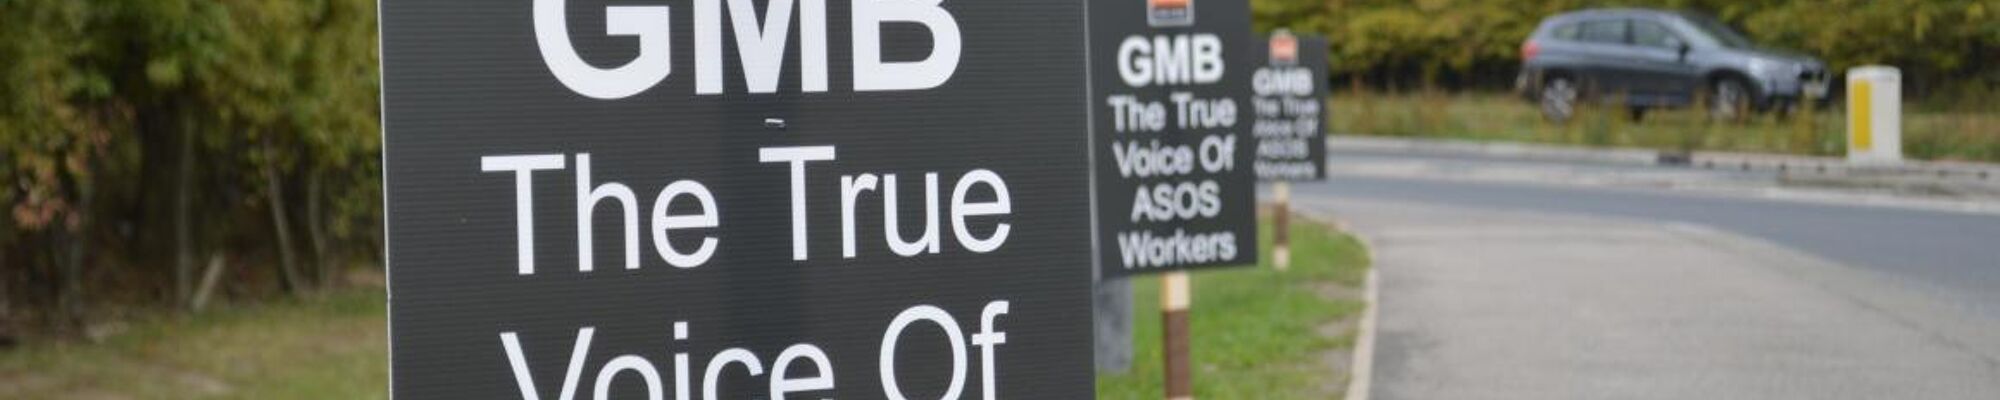 GMB Trade Union - hero image